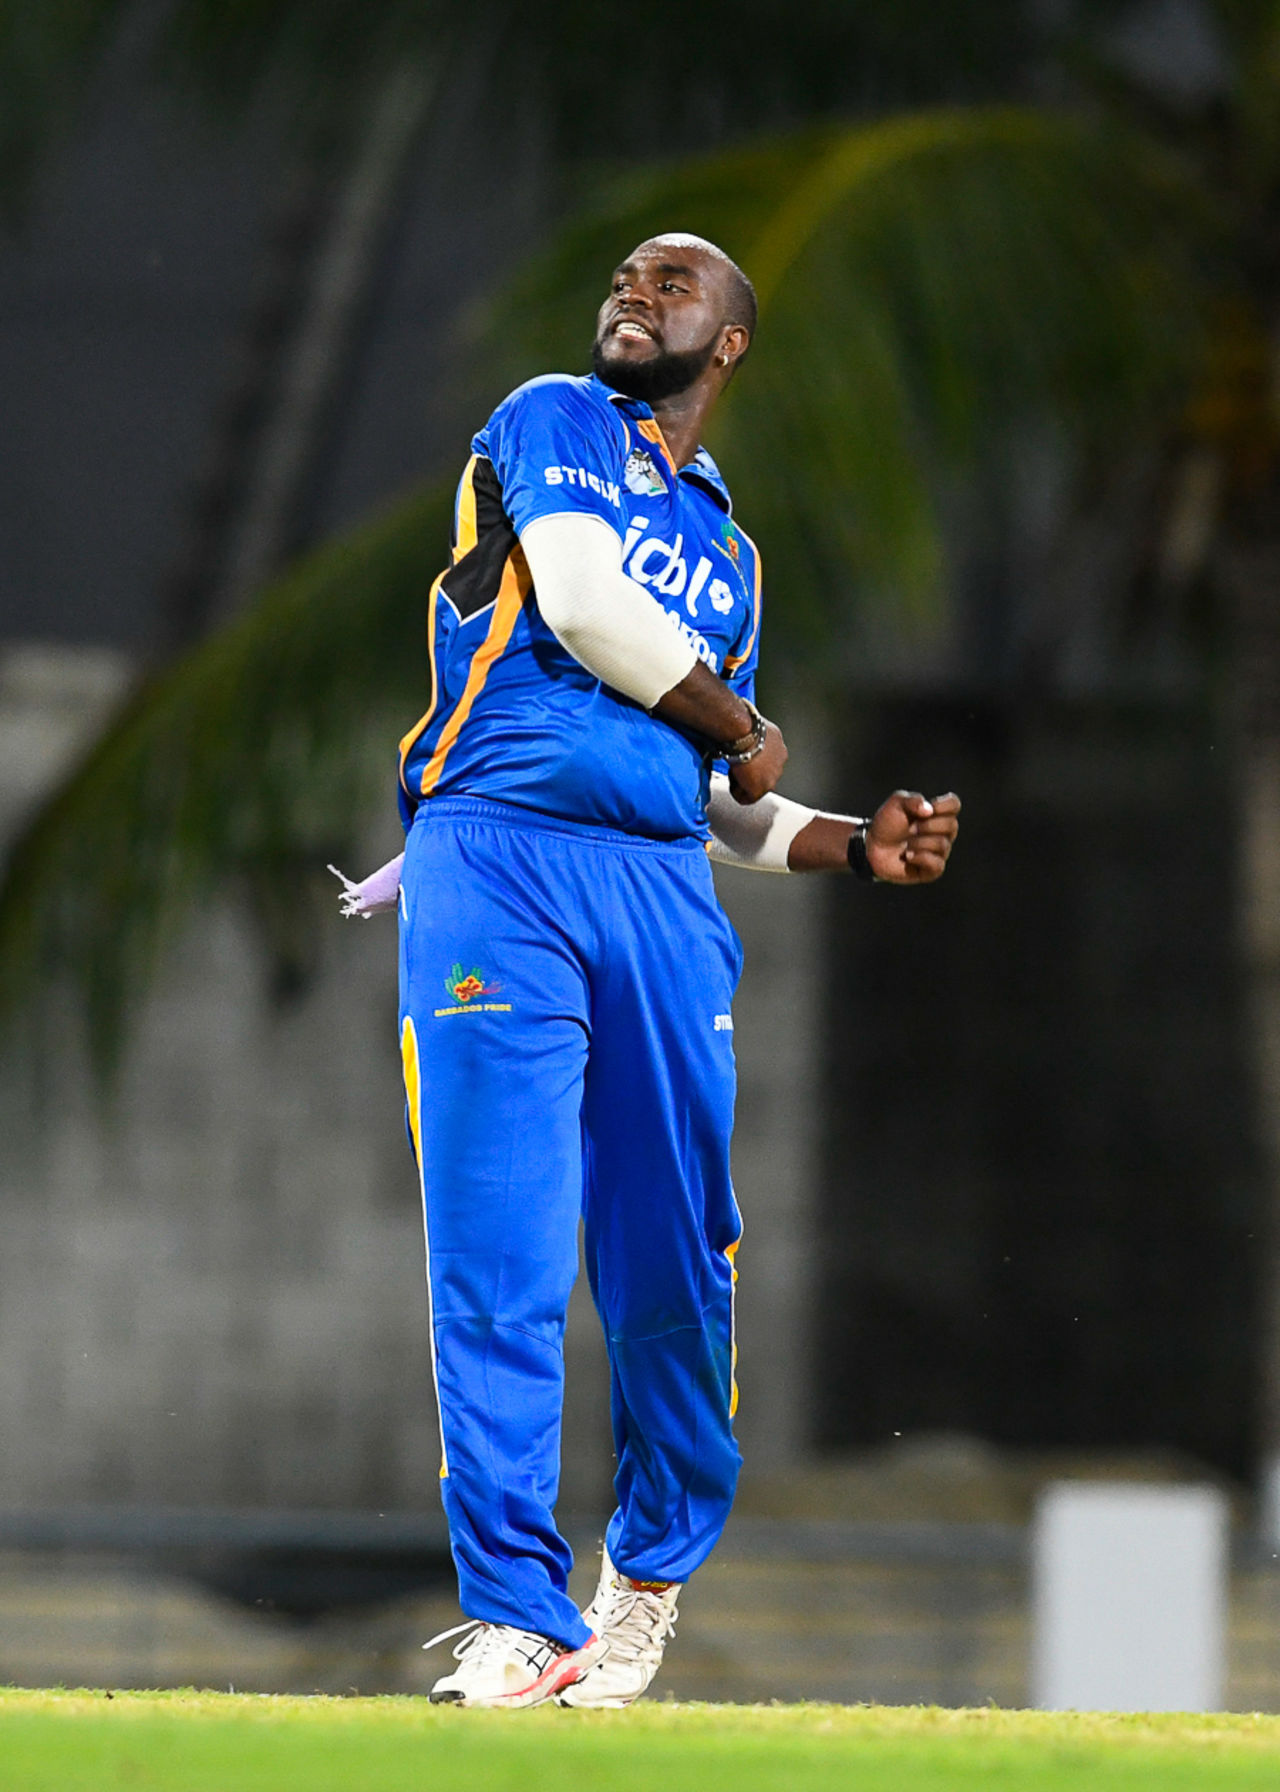 Ashley Nurse celebrates after taking one of his four wickets, Barbados v Guyana, Regional Super50, Group B, Bridgetown, January 24, 2017